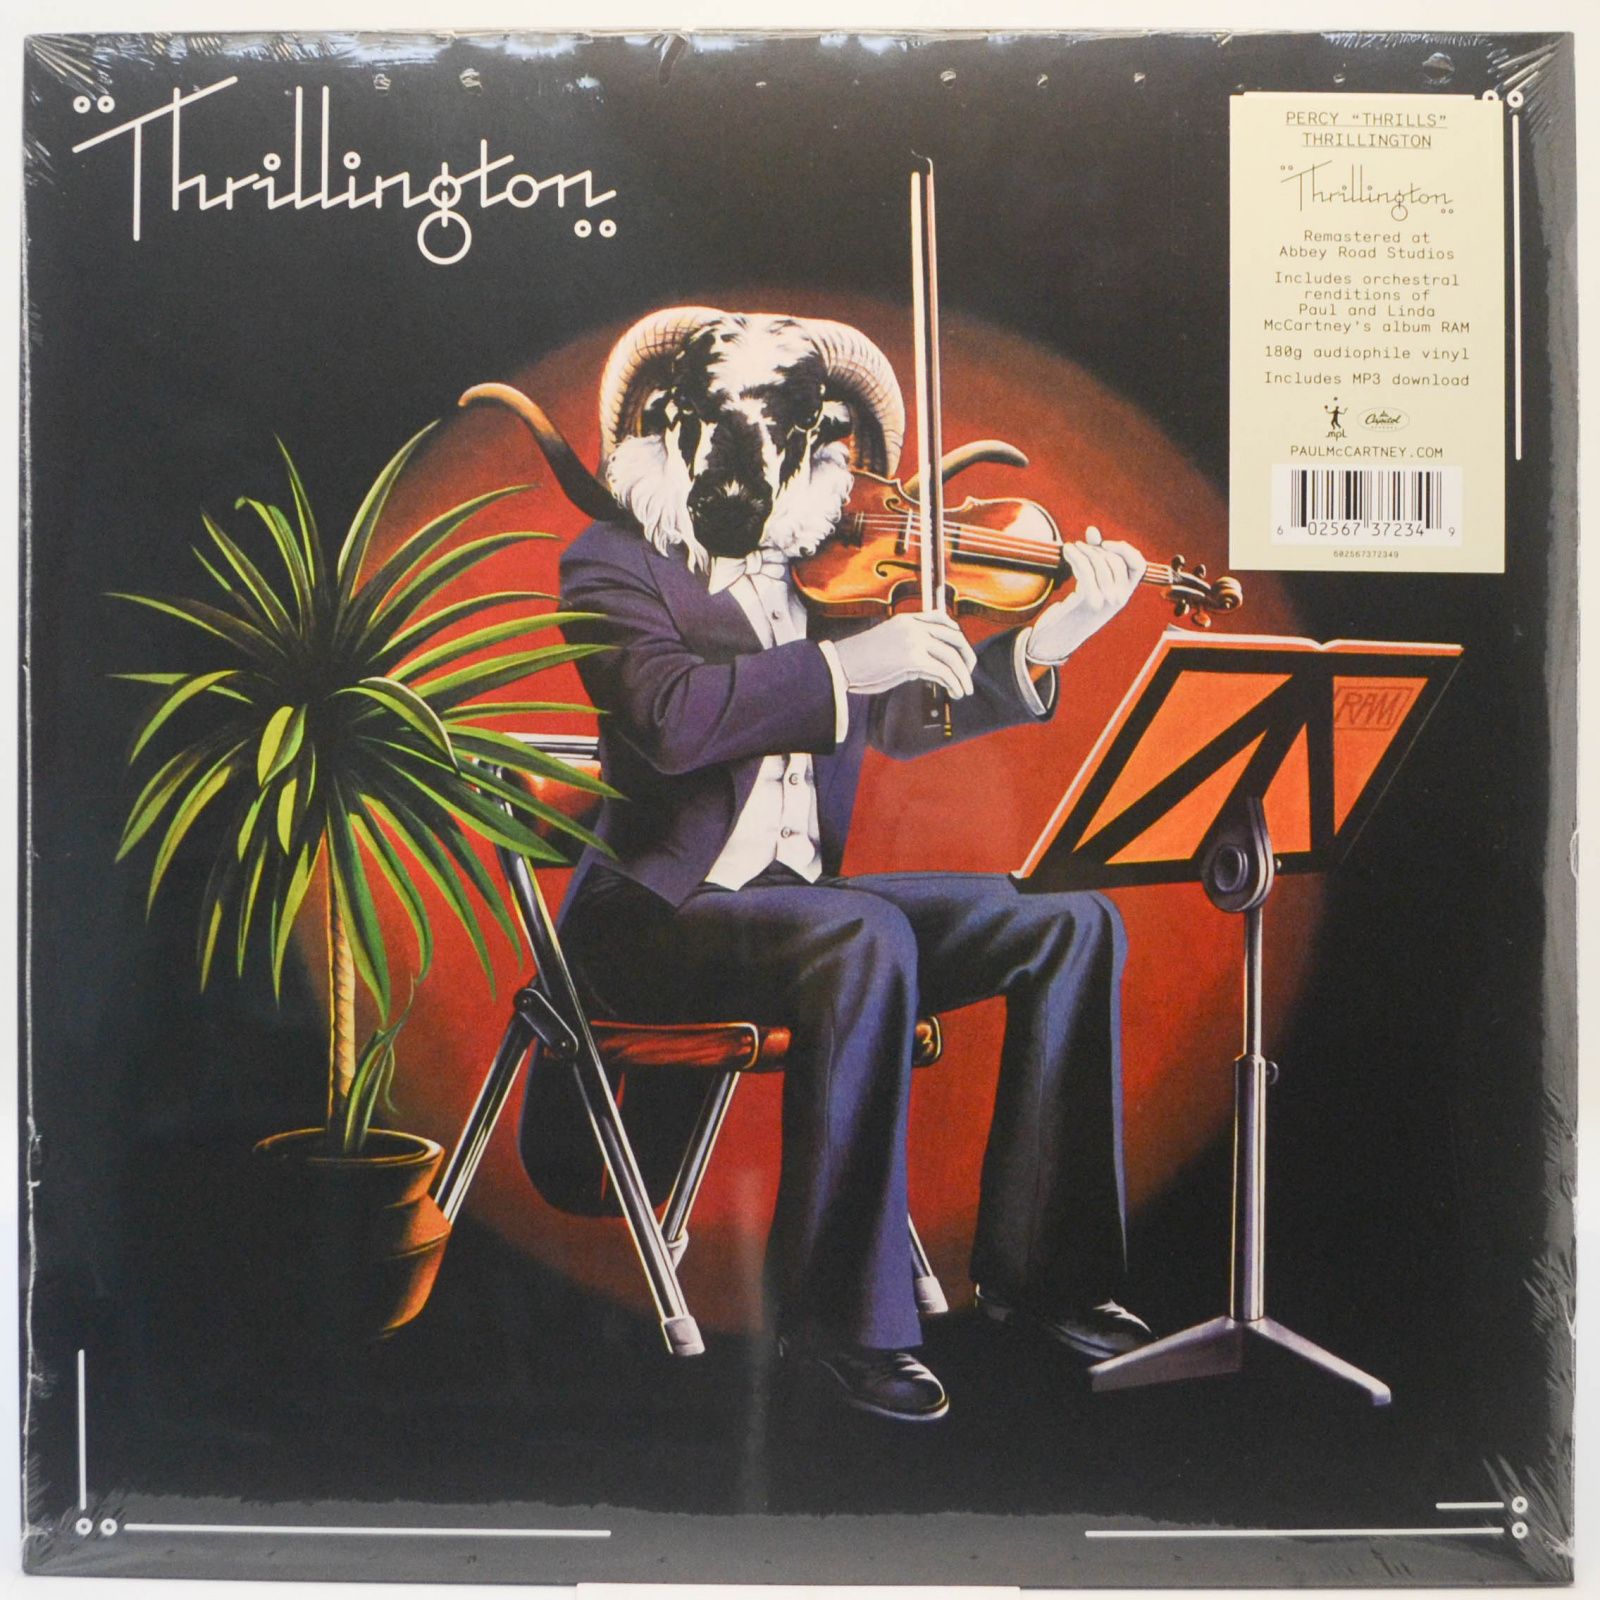 Percy "Thrills" Thrillington — Thrillington, 2018